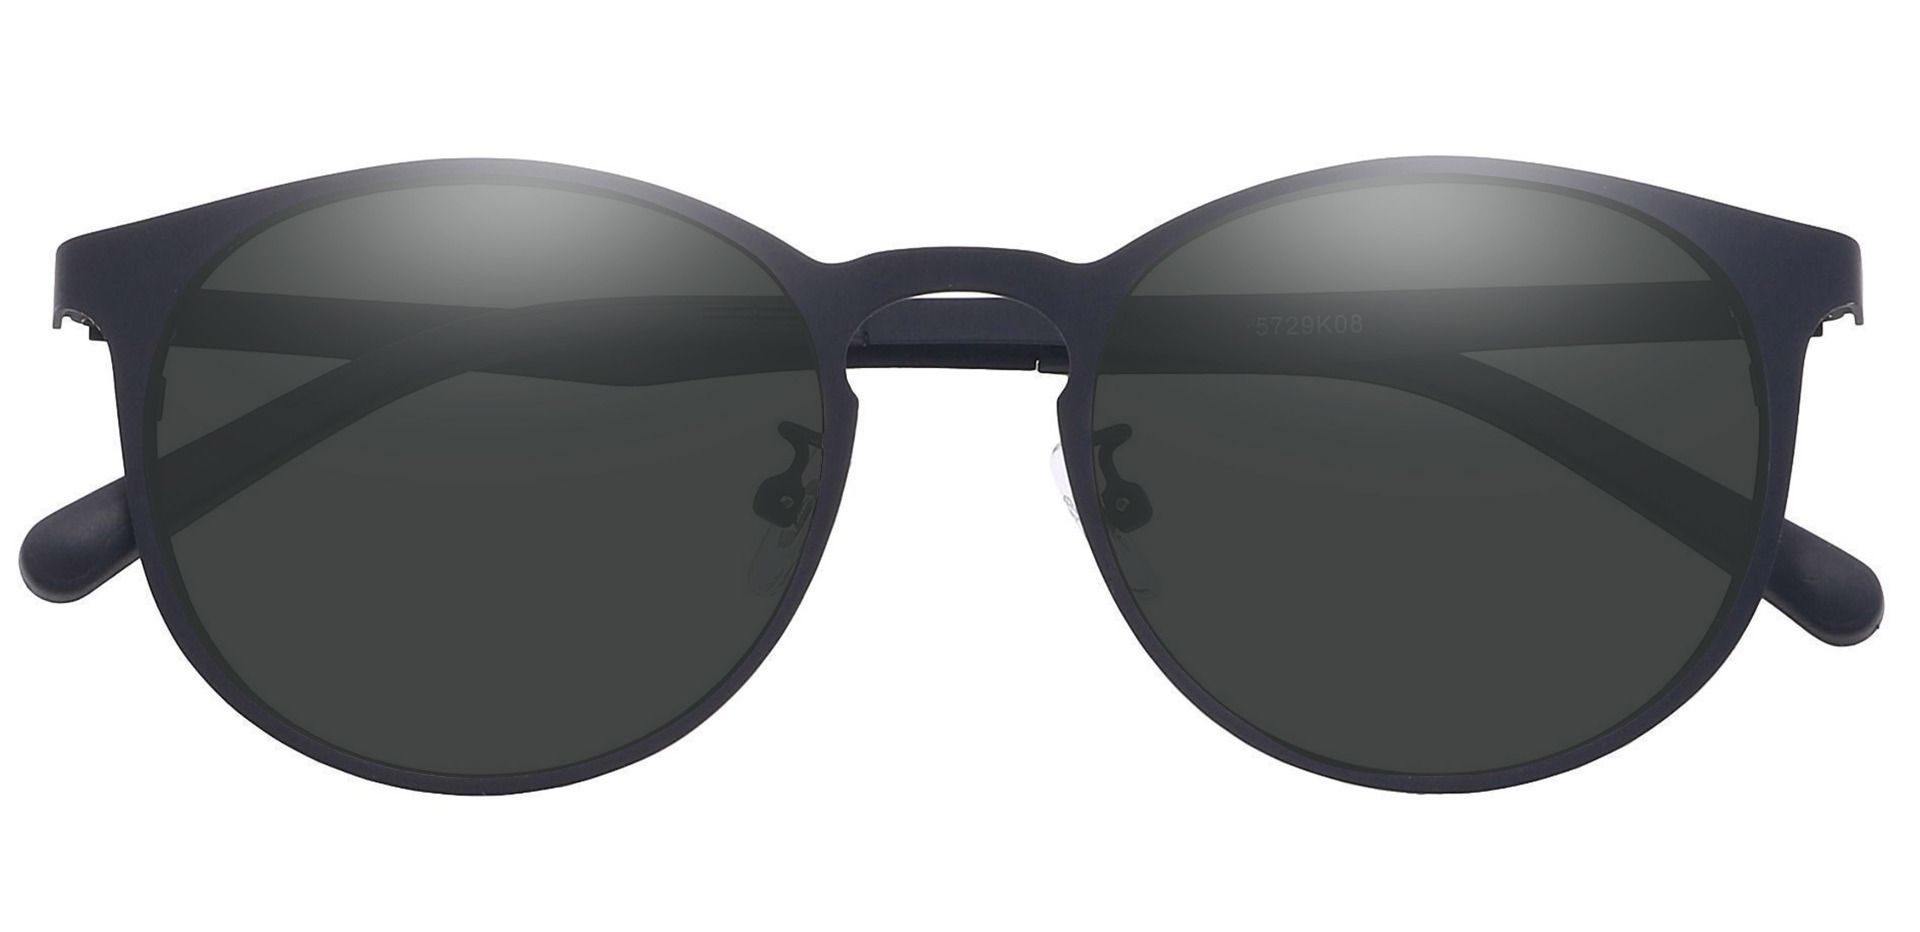 Wallace Oval Progressive Sunglasses - Black Frame With Gray Lenses